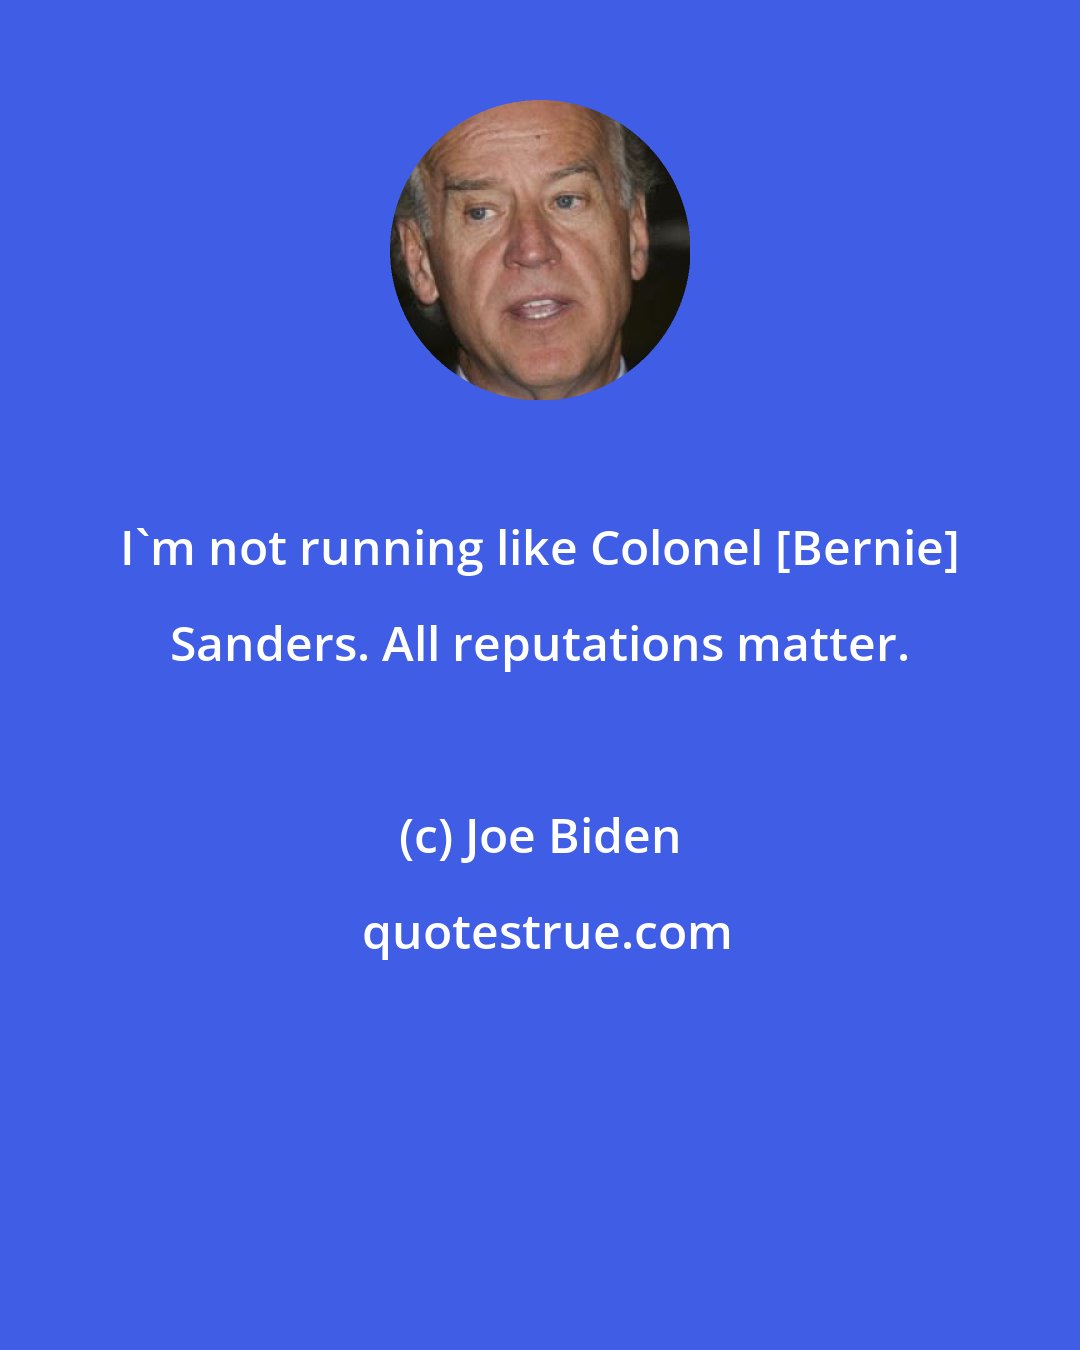 Joe Biden: I'm not running like Colonel [Bernie] Sanders. All reputations matter.